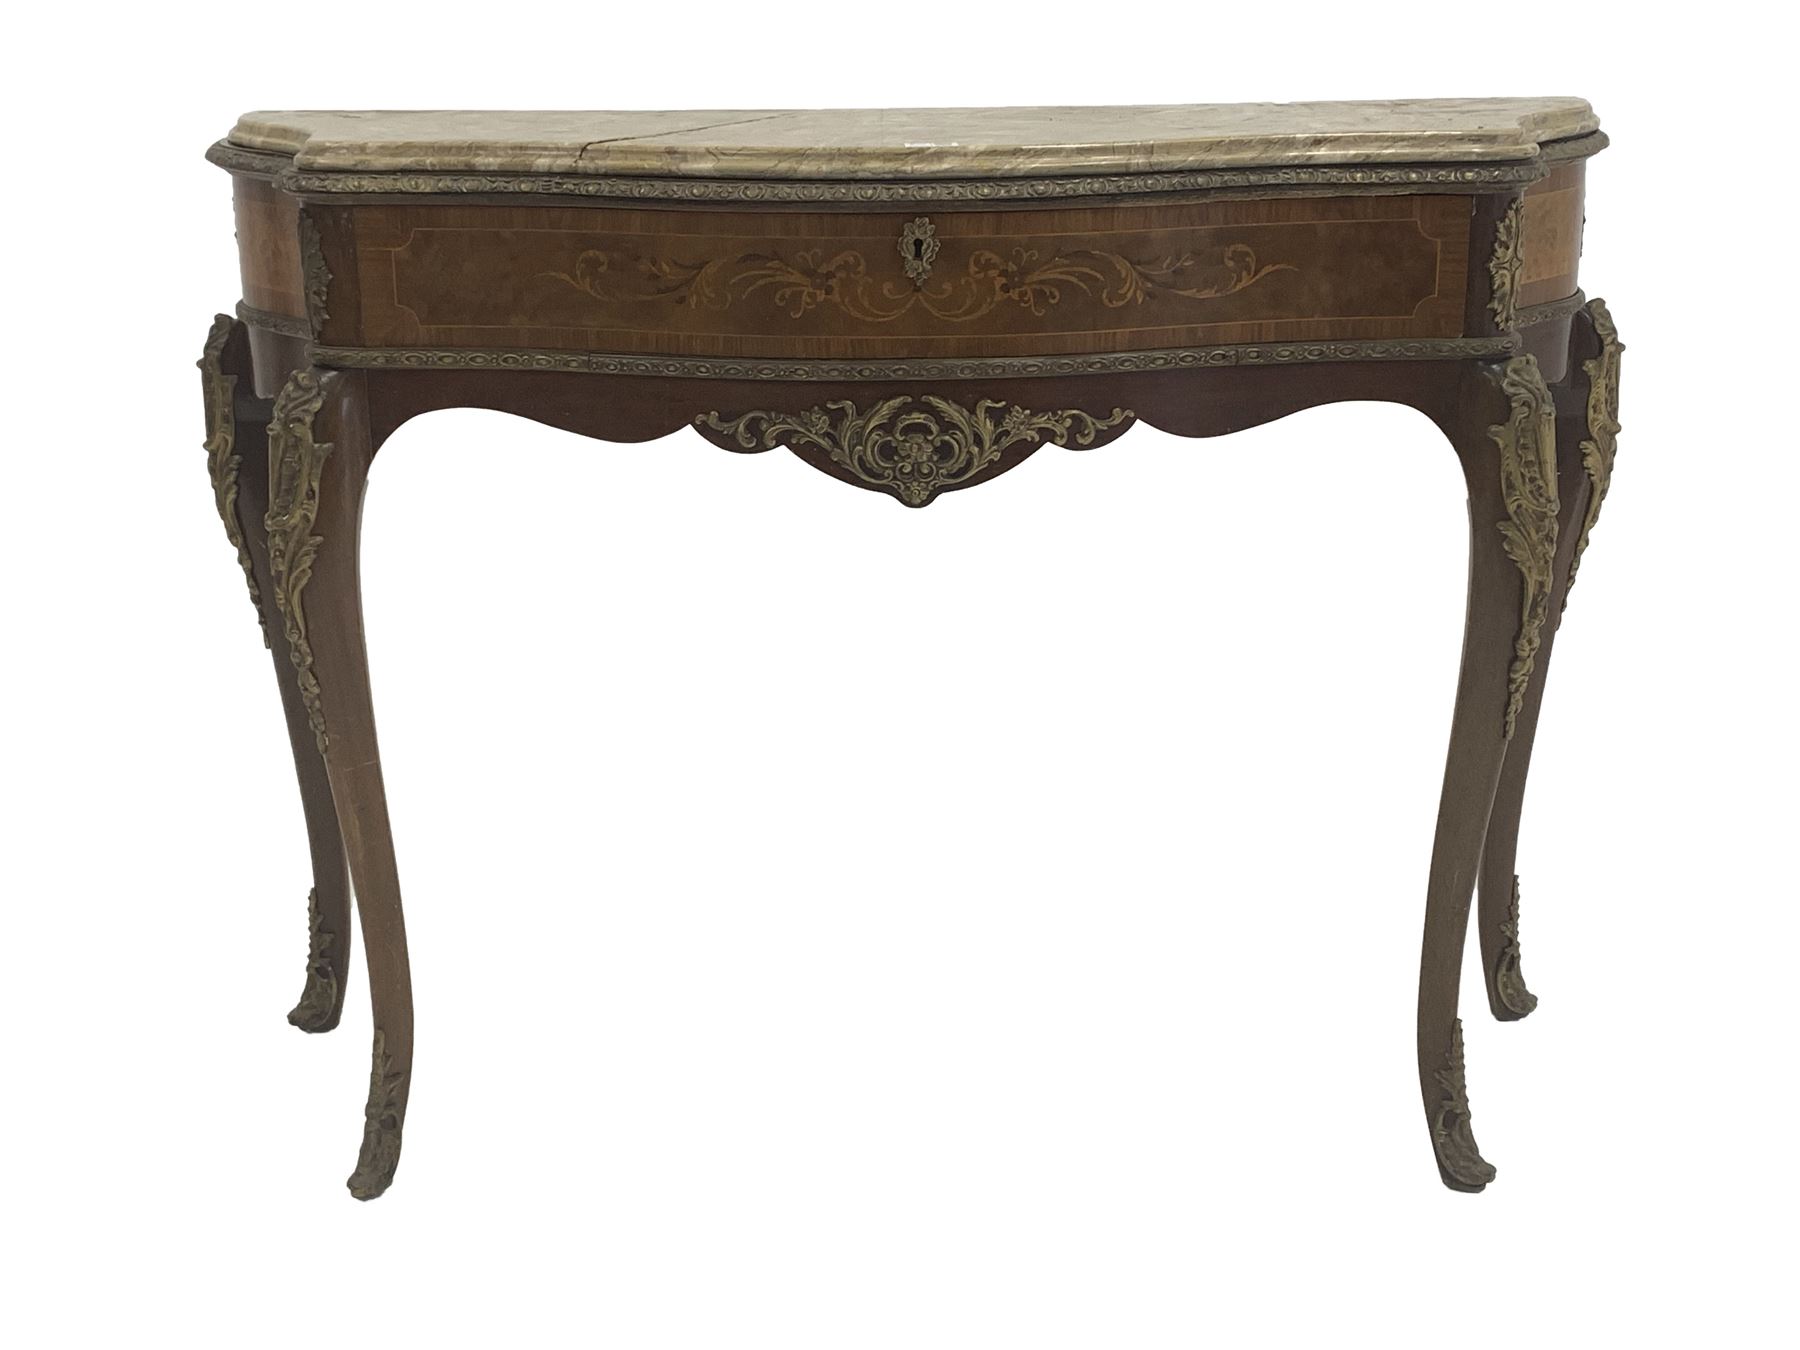 Mid 20th century French style walnut and mahogany veneered console table